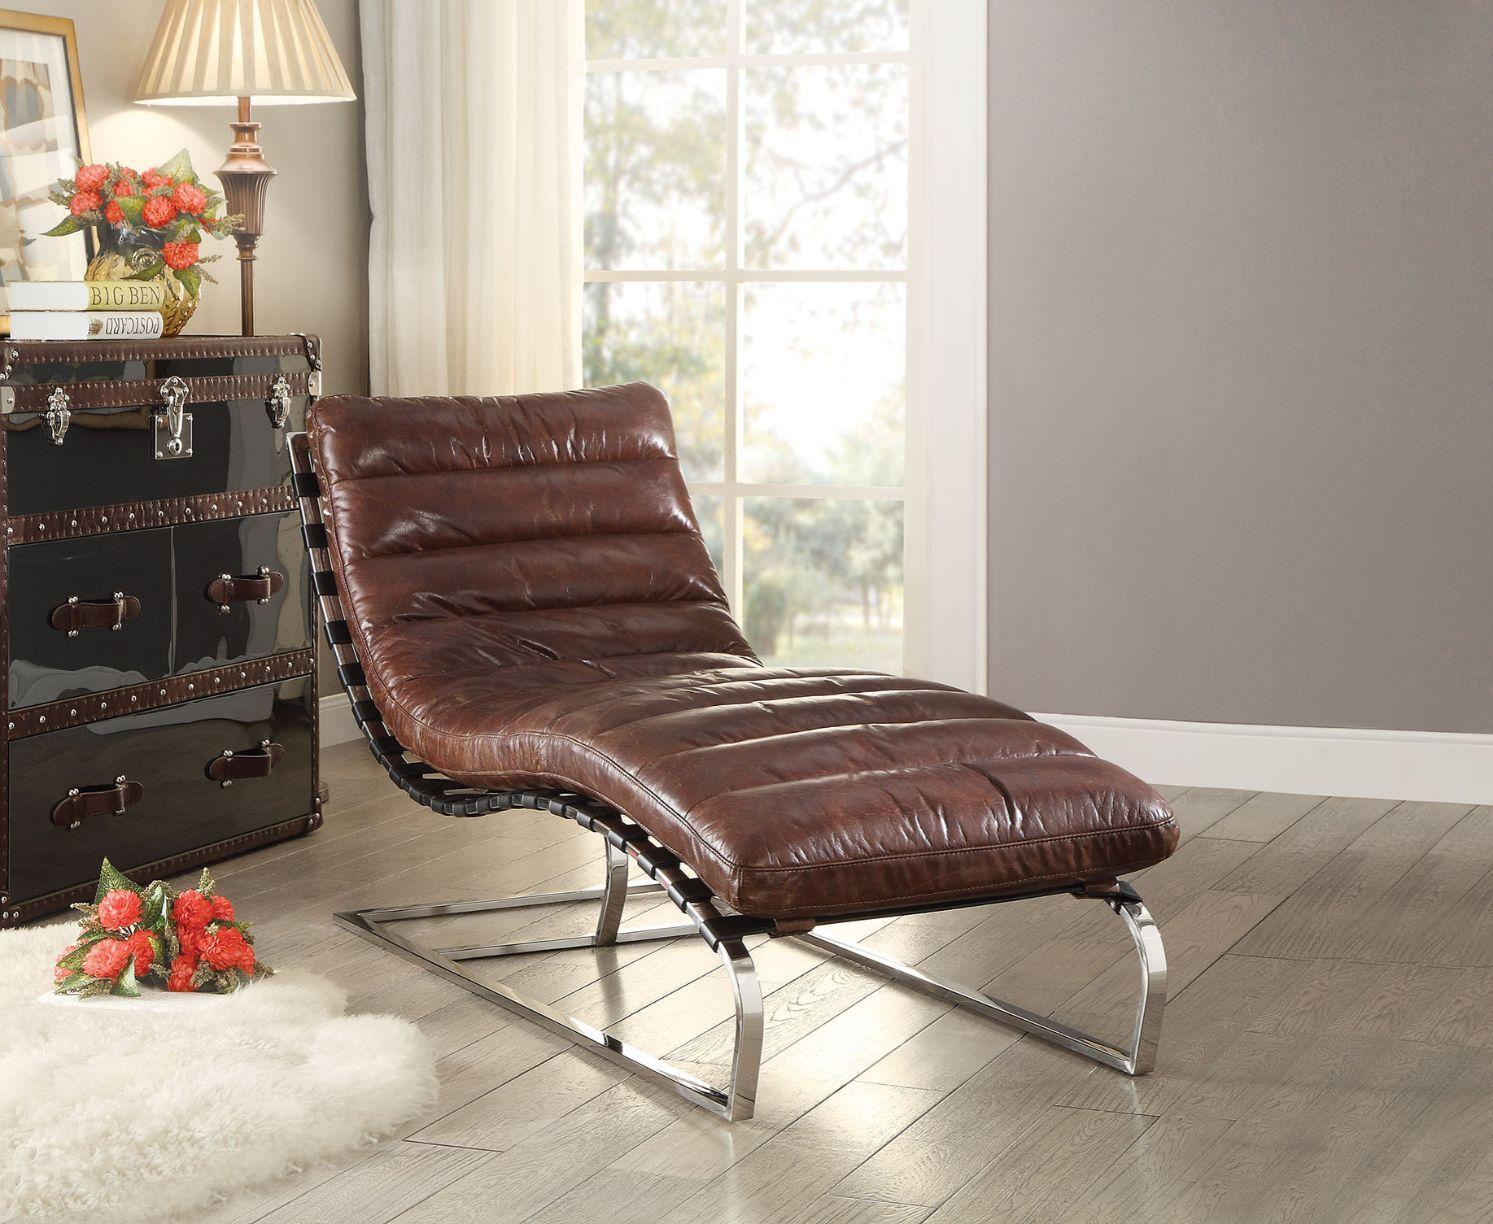 Contemporary Chaise Qortini Chaise 96670-C 96670-C in Dark Brown Top grain leather